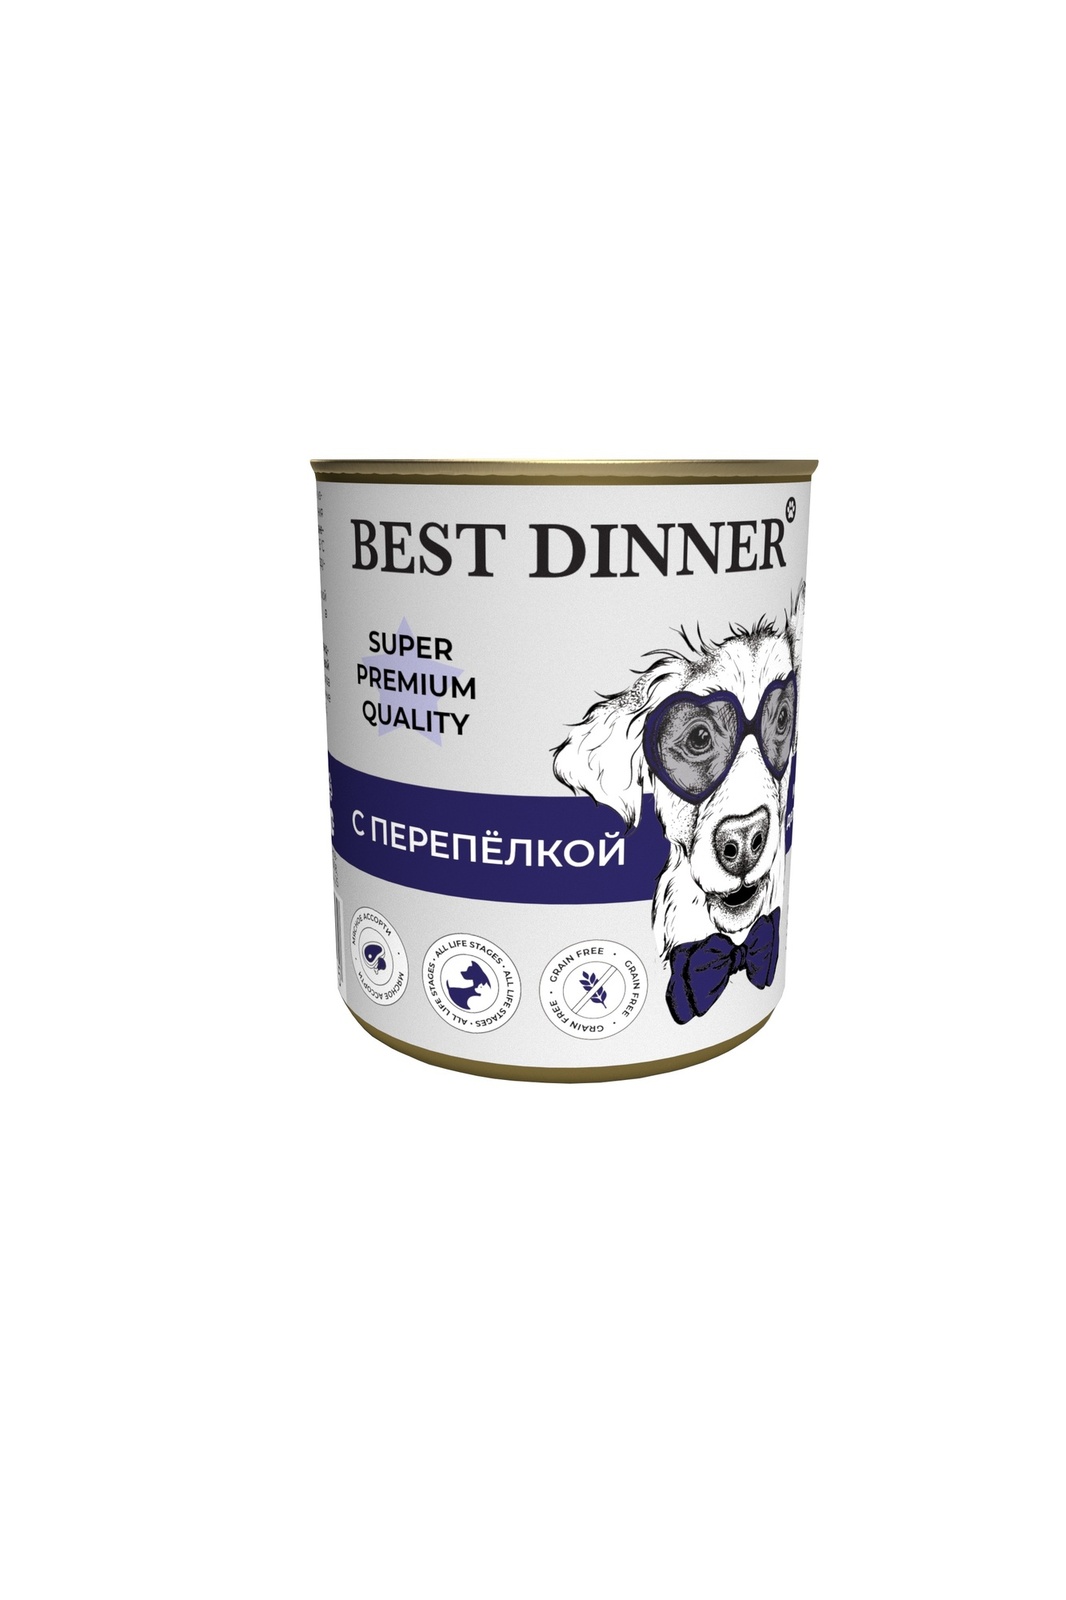 Best Dinner Best Dinner консервы для собак Super Premium С перепелкой (340 г) best dinner best dinner консервы premium меню 3 с говядиной и кроликом 340 г